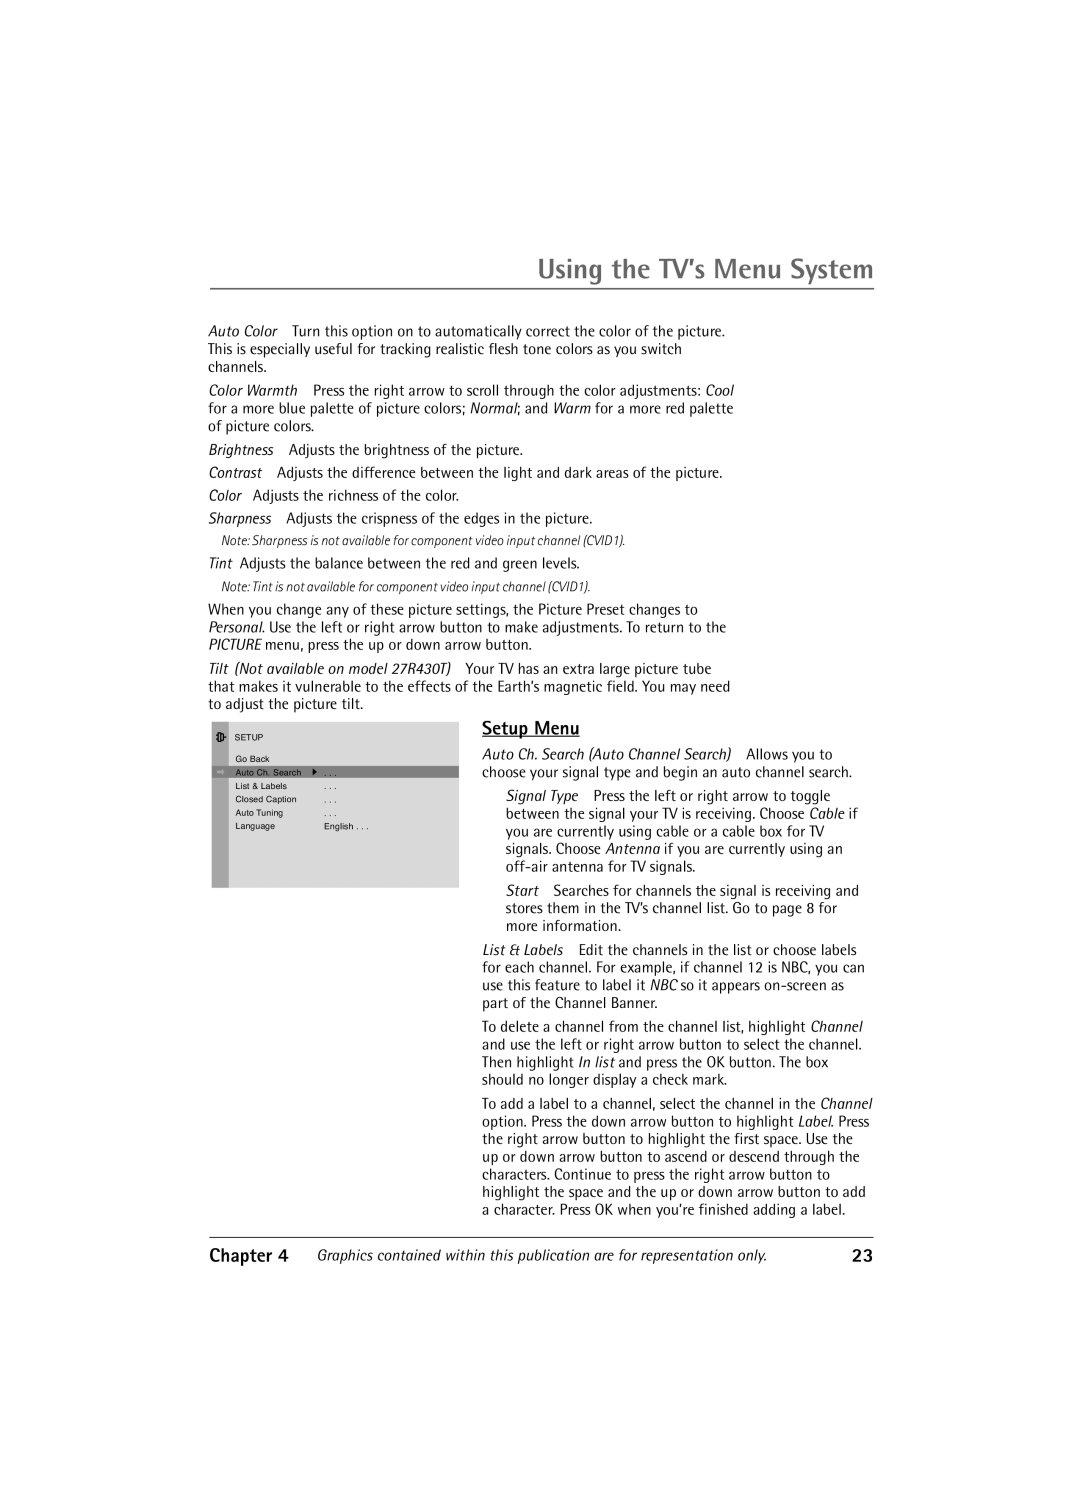 RCA 36V430T manual Using the TV’s Menu System, Setup Menu, Chapter 